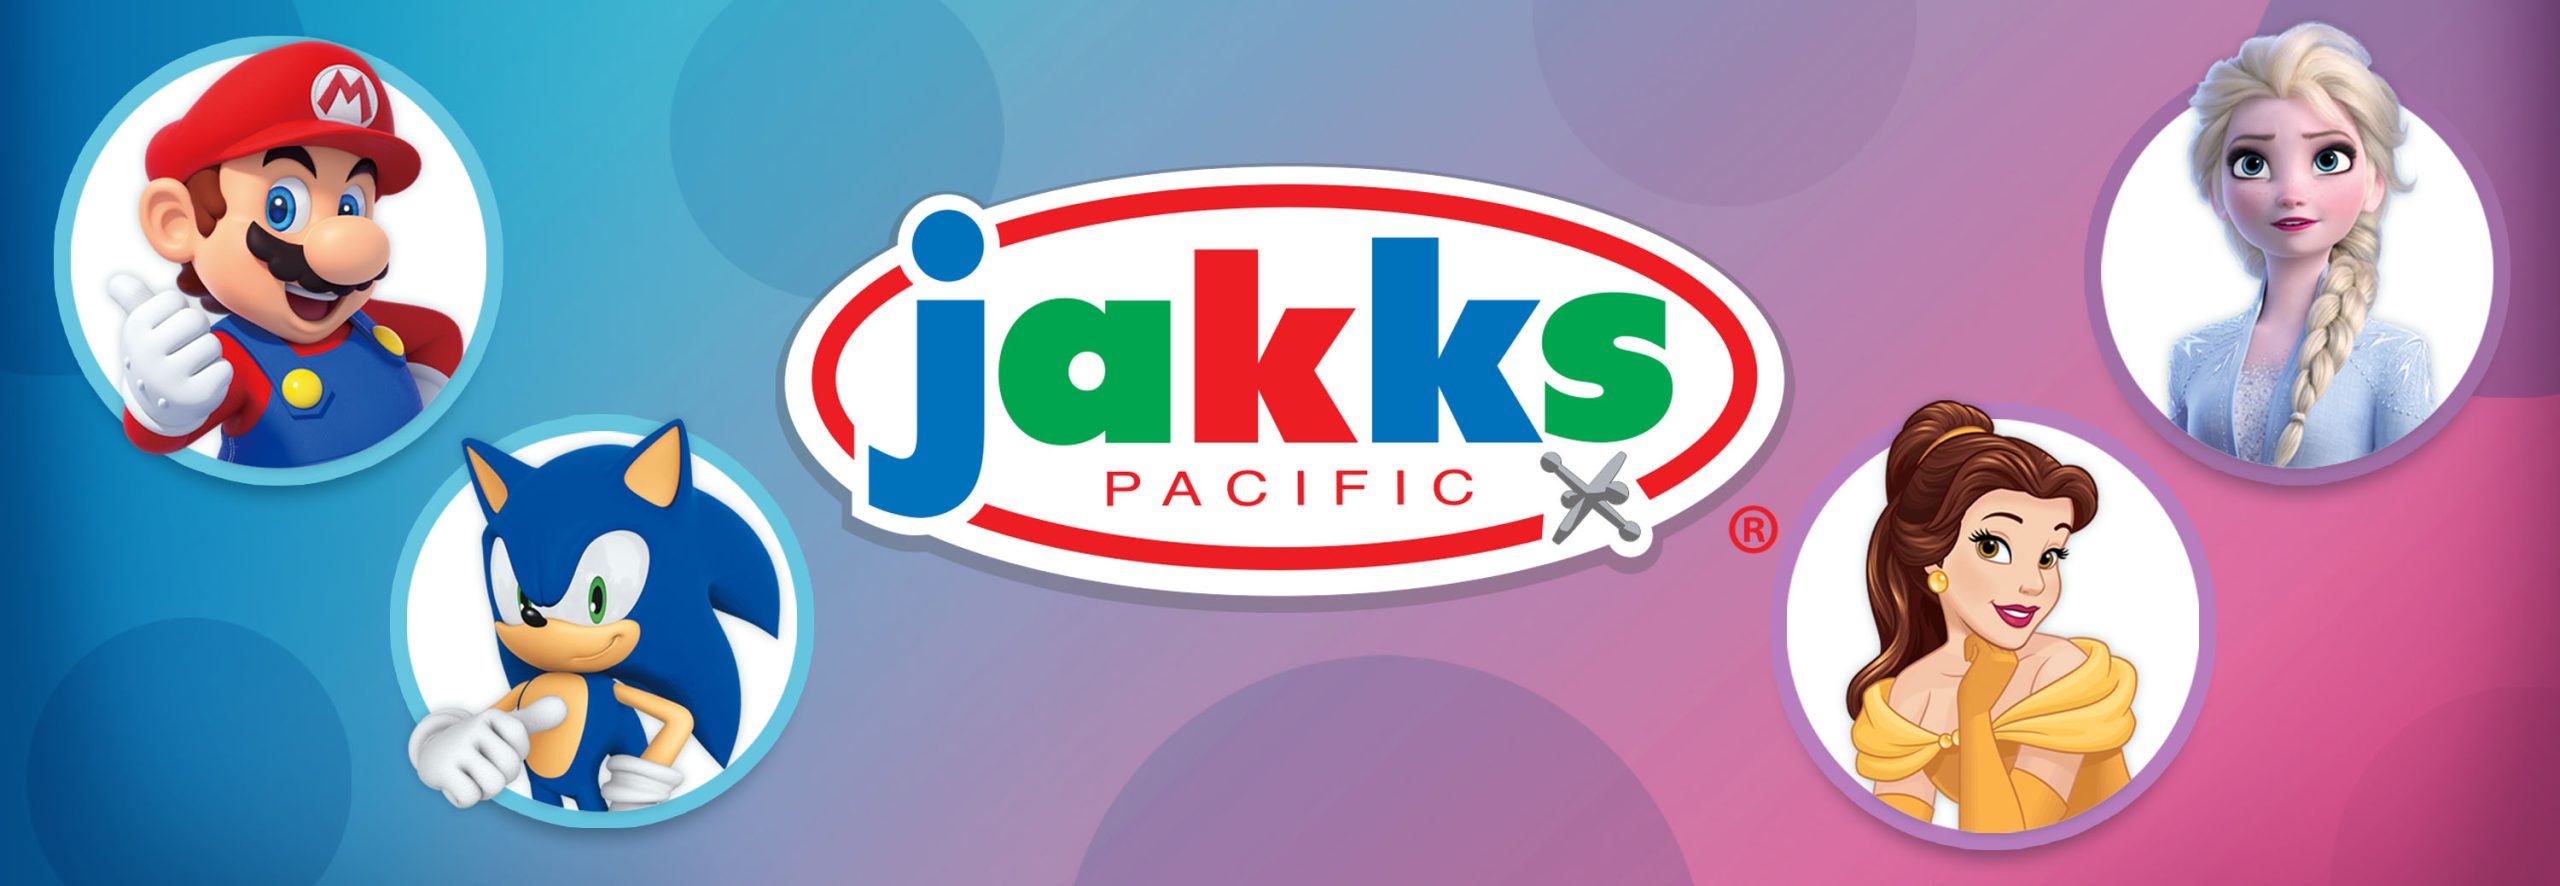 Super Mario Hide-and-Seek Game - JAKKS Pacific, Inc.